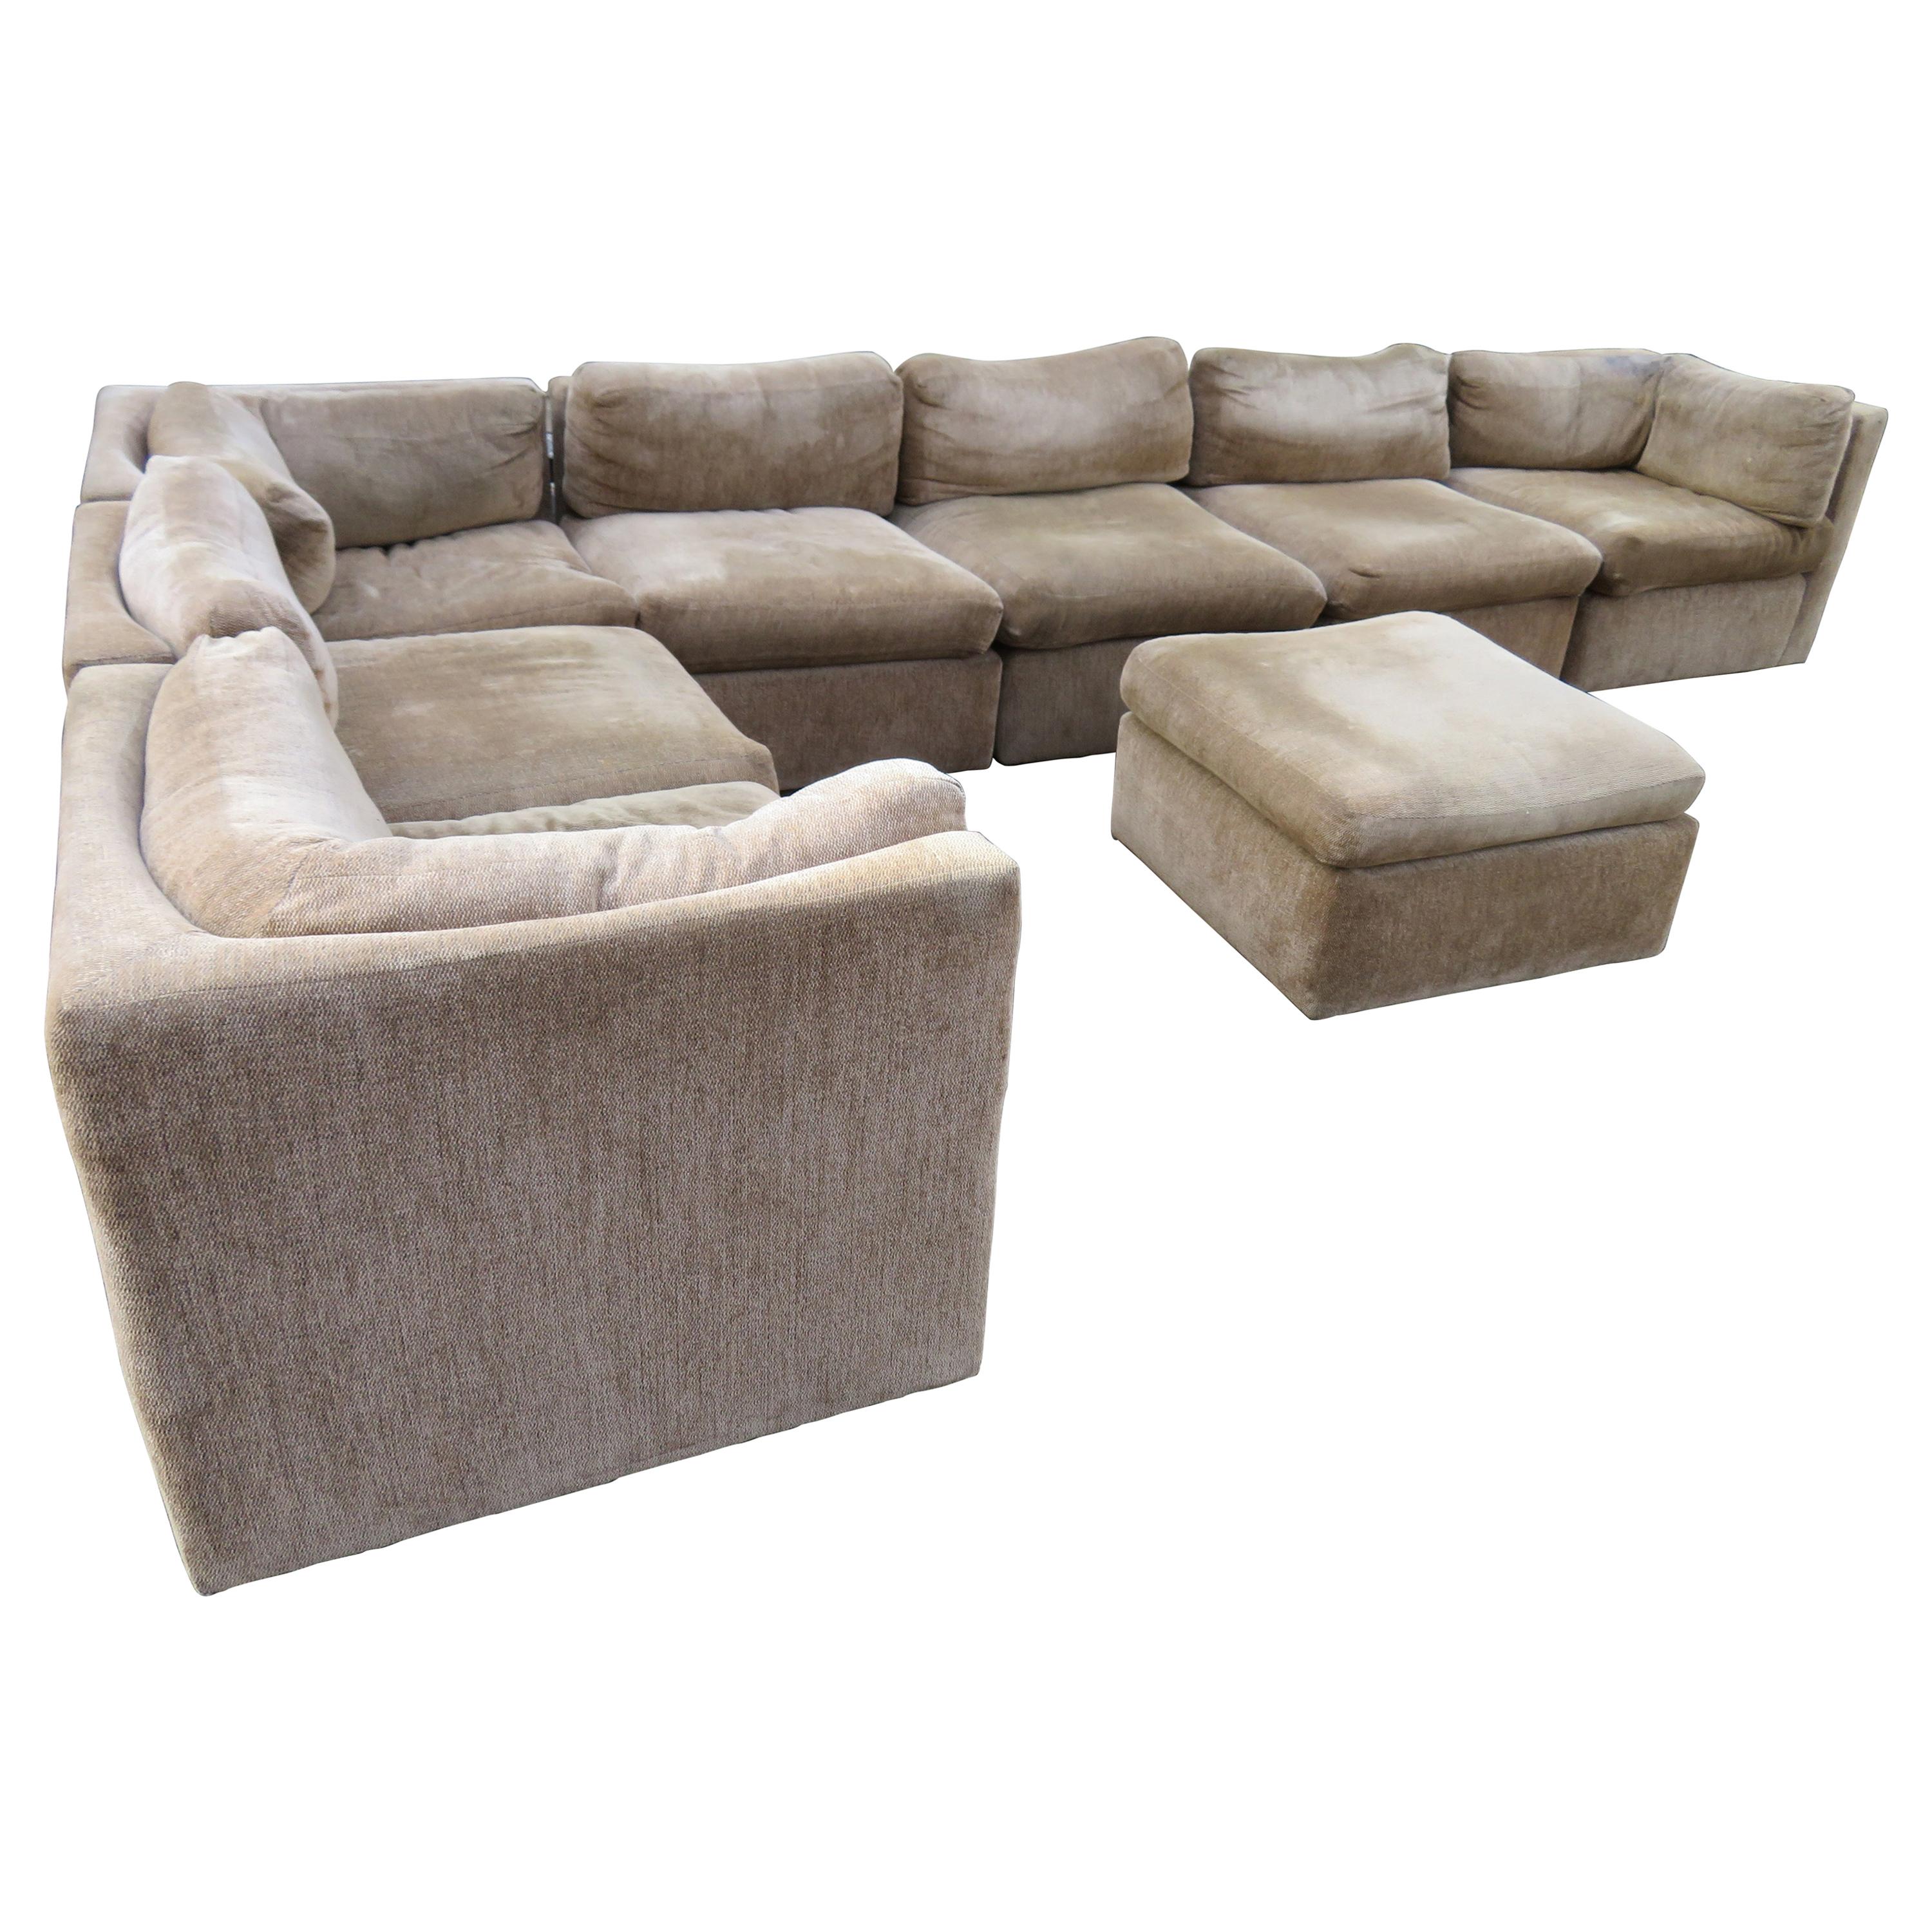 Wonderful 8-Piece Milo Baughman Curved Seat Sectional Sofa Mid-Century Modern